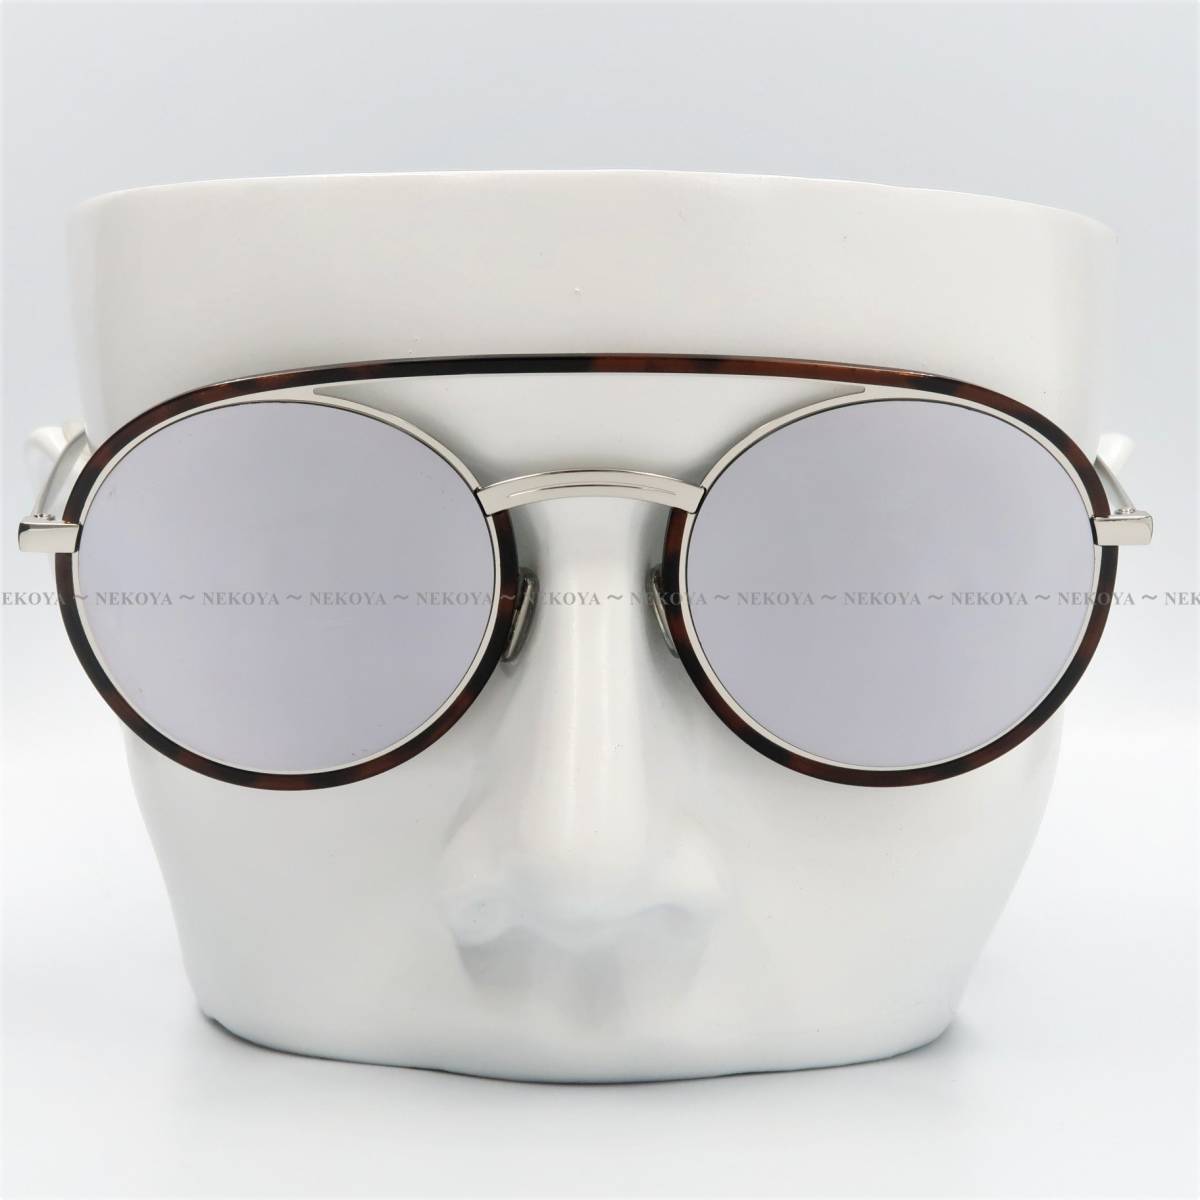 DIOR HOMME DIORSYNTHESIS солнцезащитные очки Habana . склон широкий . Dior Homme 